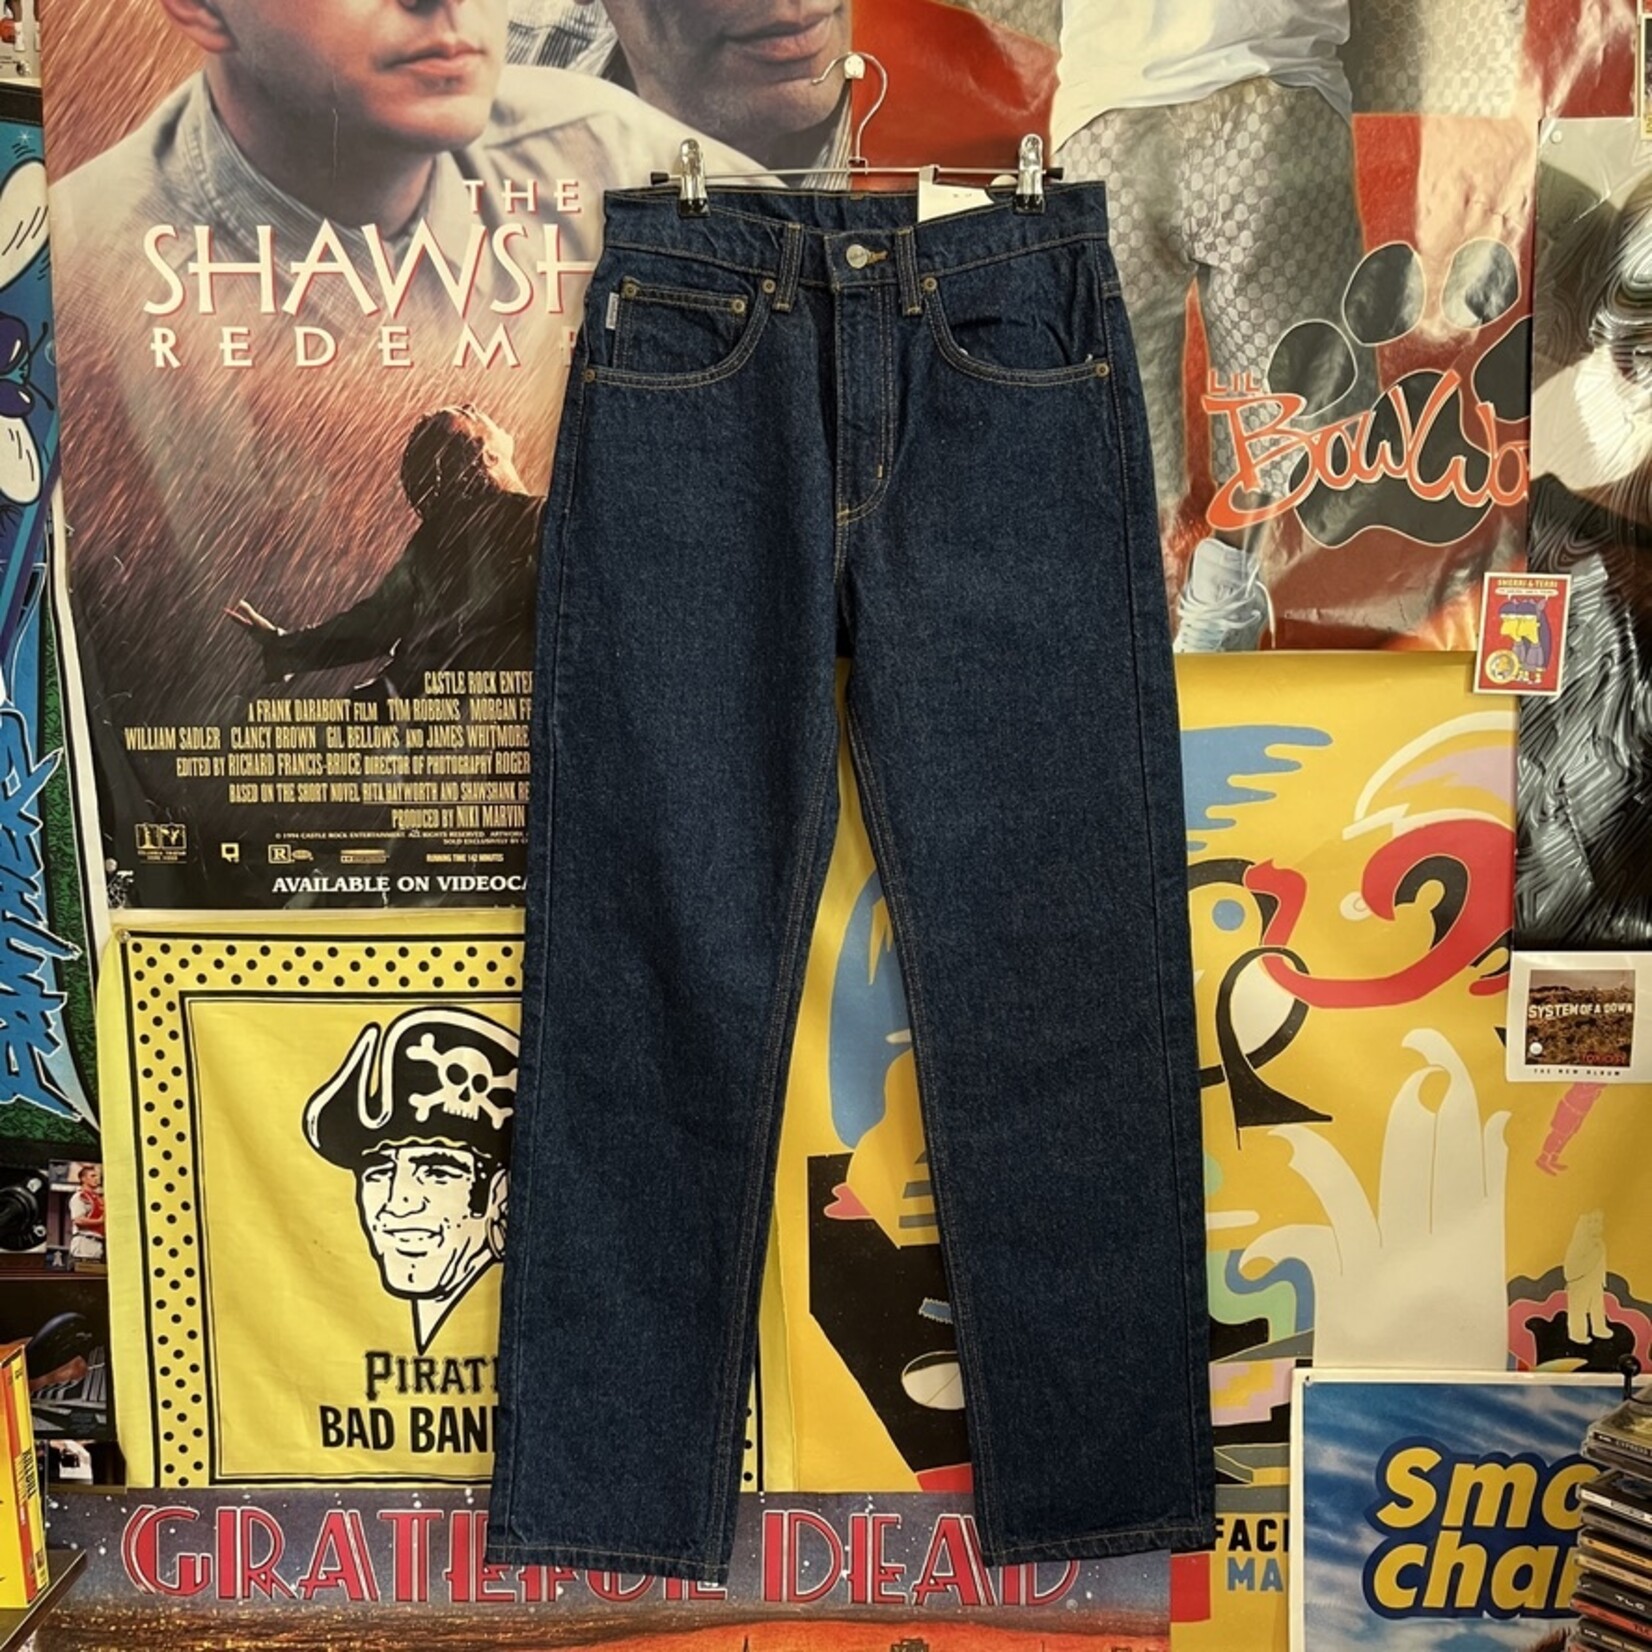 13434	ds carhartt jeans sz 29 x 30